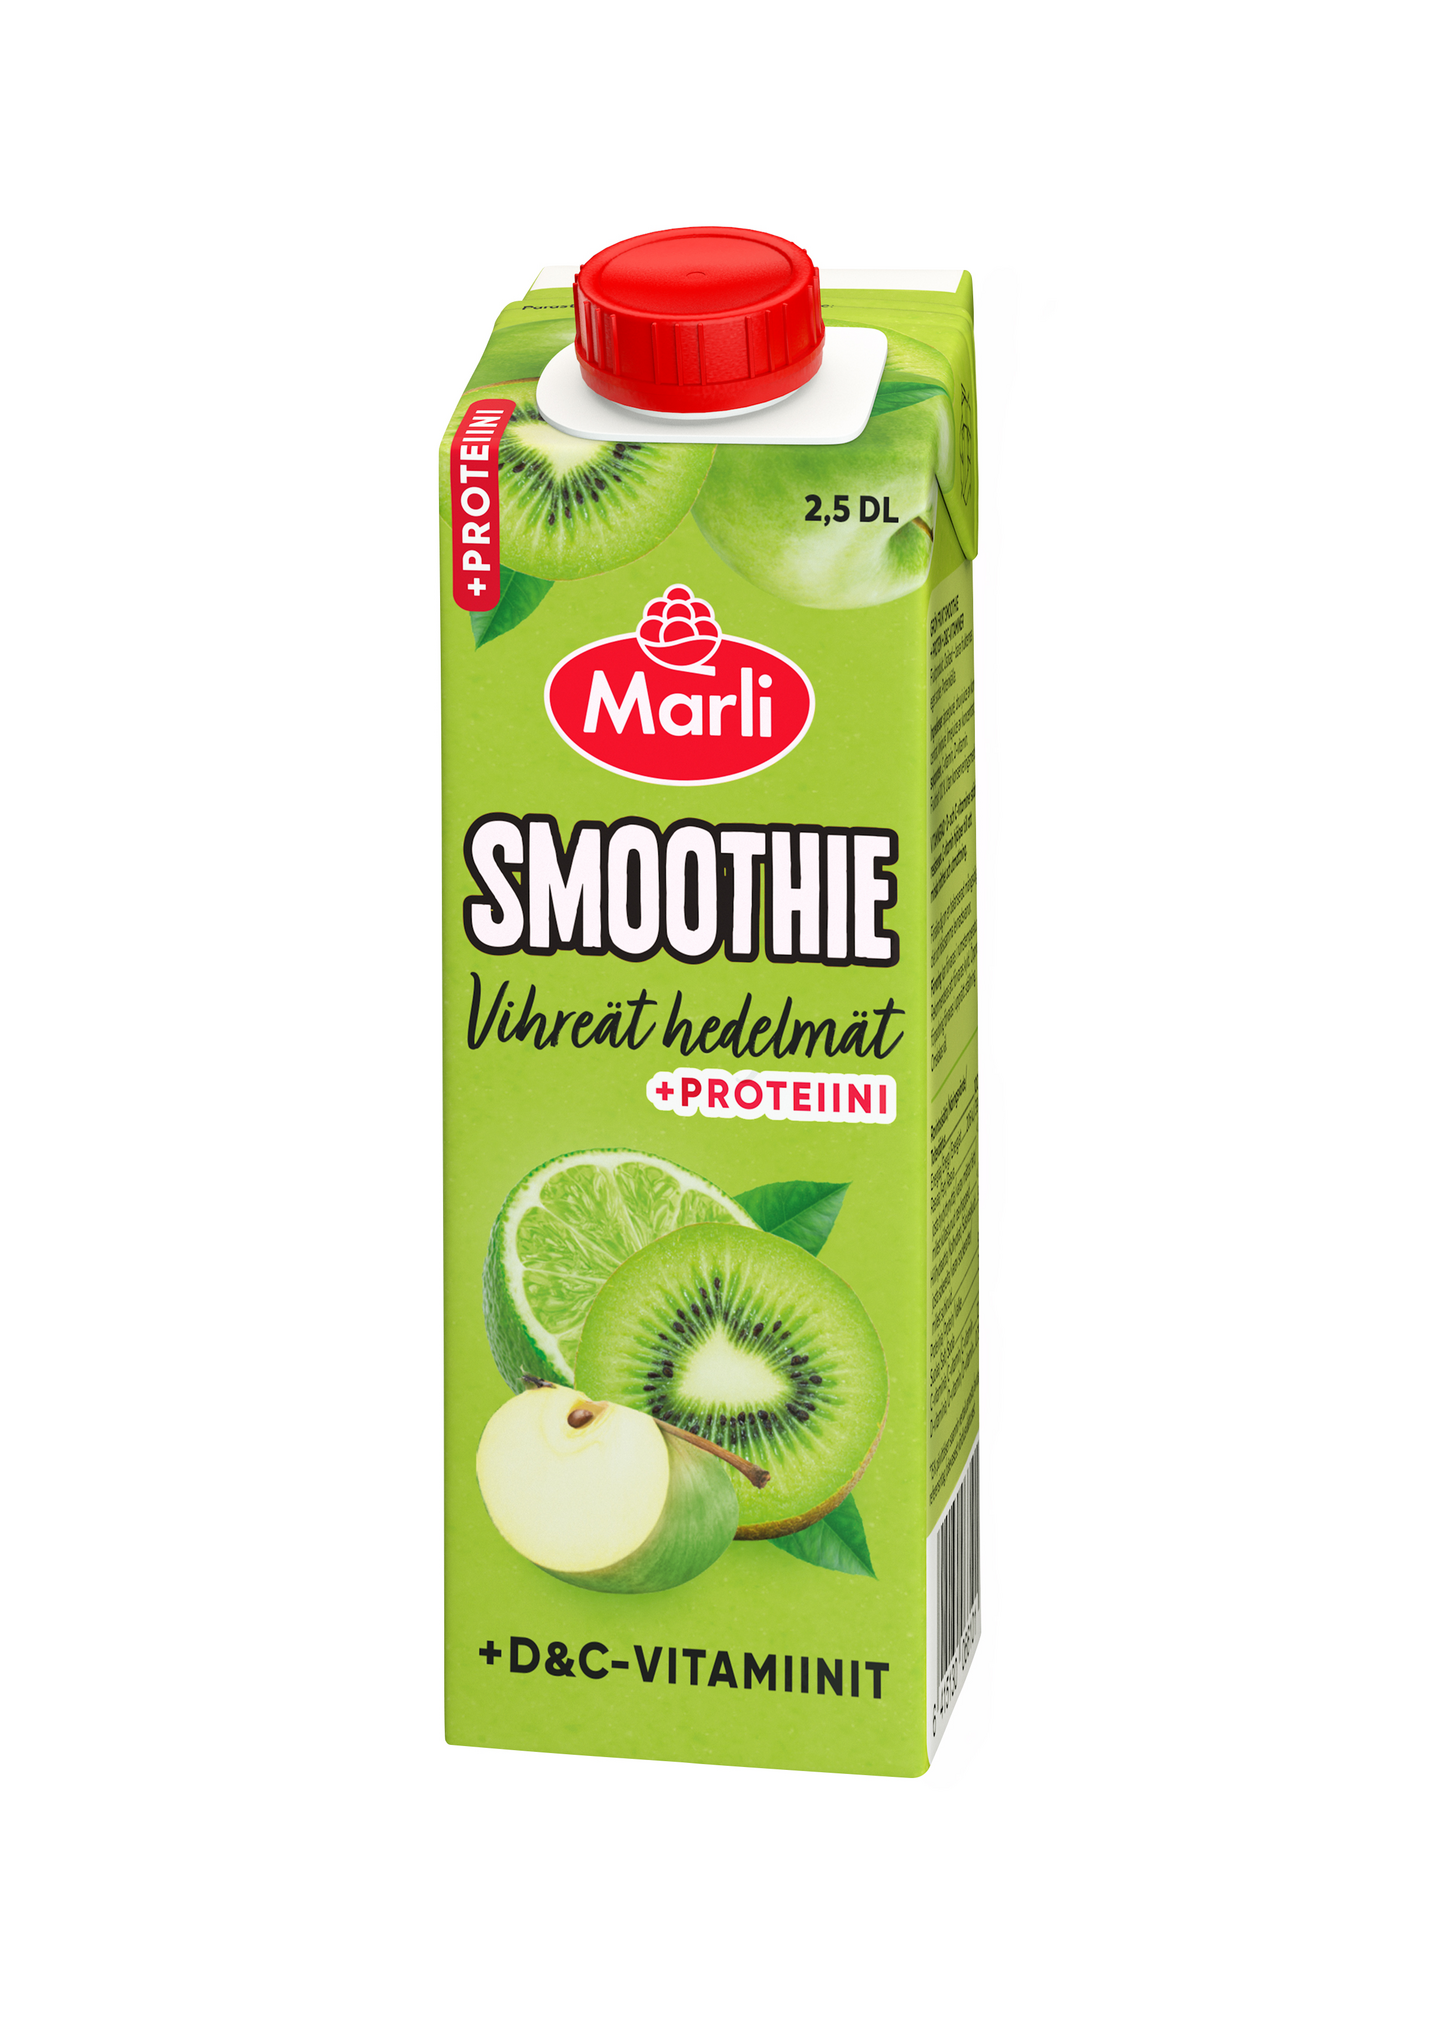 Marli vihreät hedelmät smoothie D&C -vitamiinit ja proteiini 2,5dl |  K-Ruoka Verkkokauppa